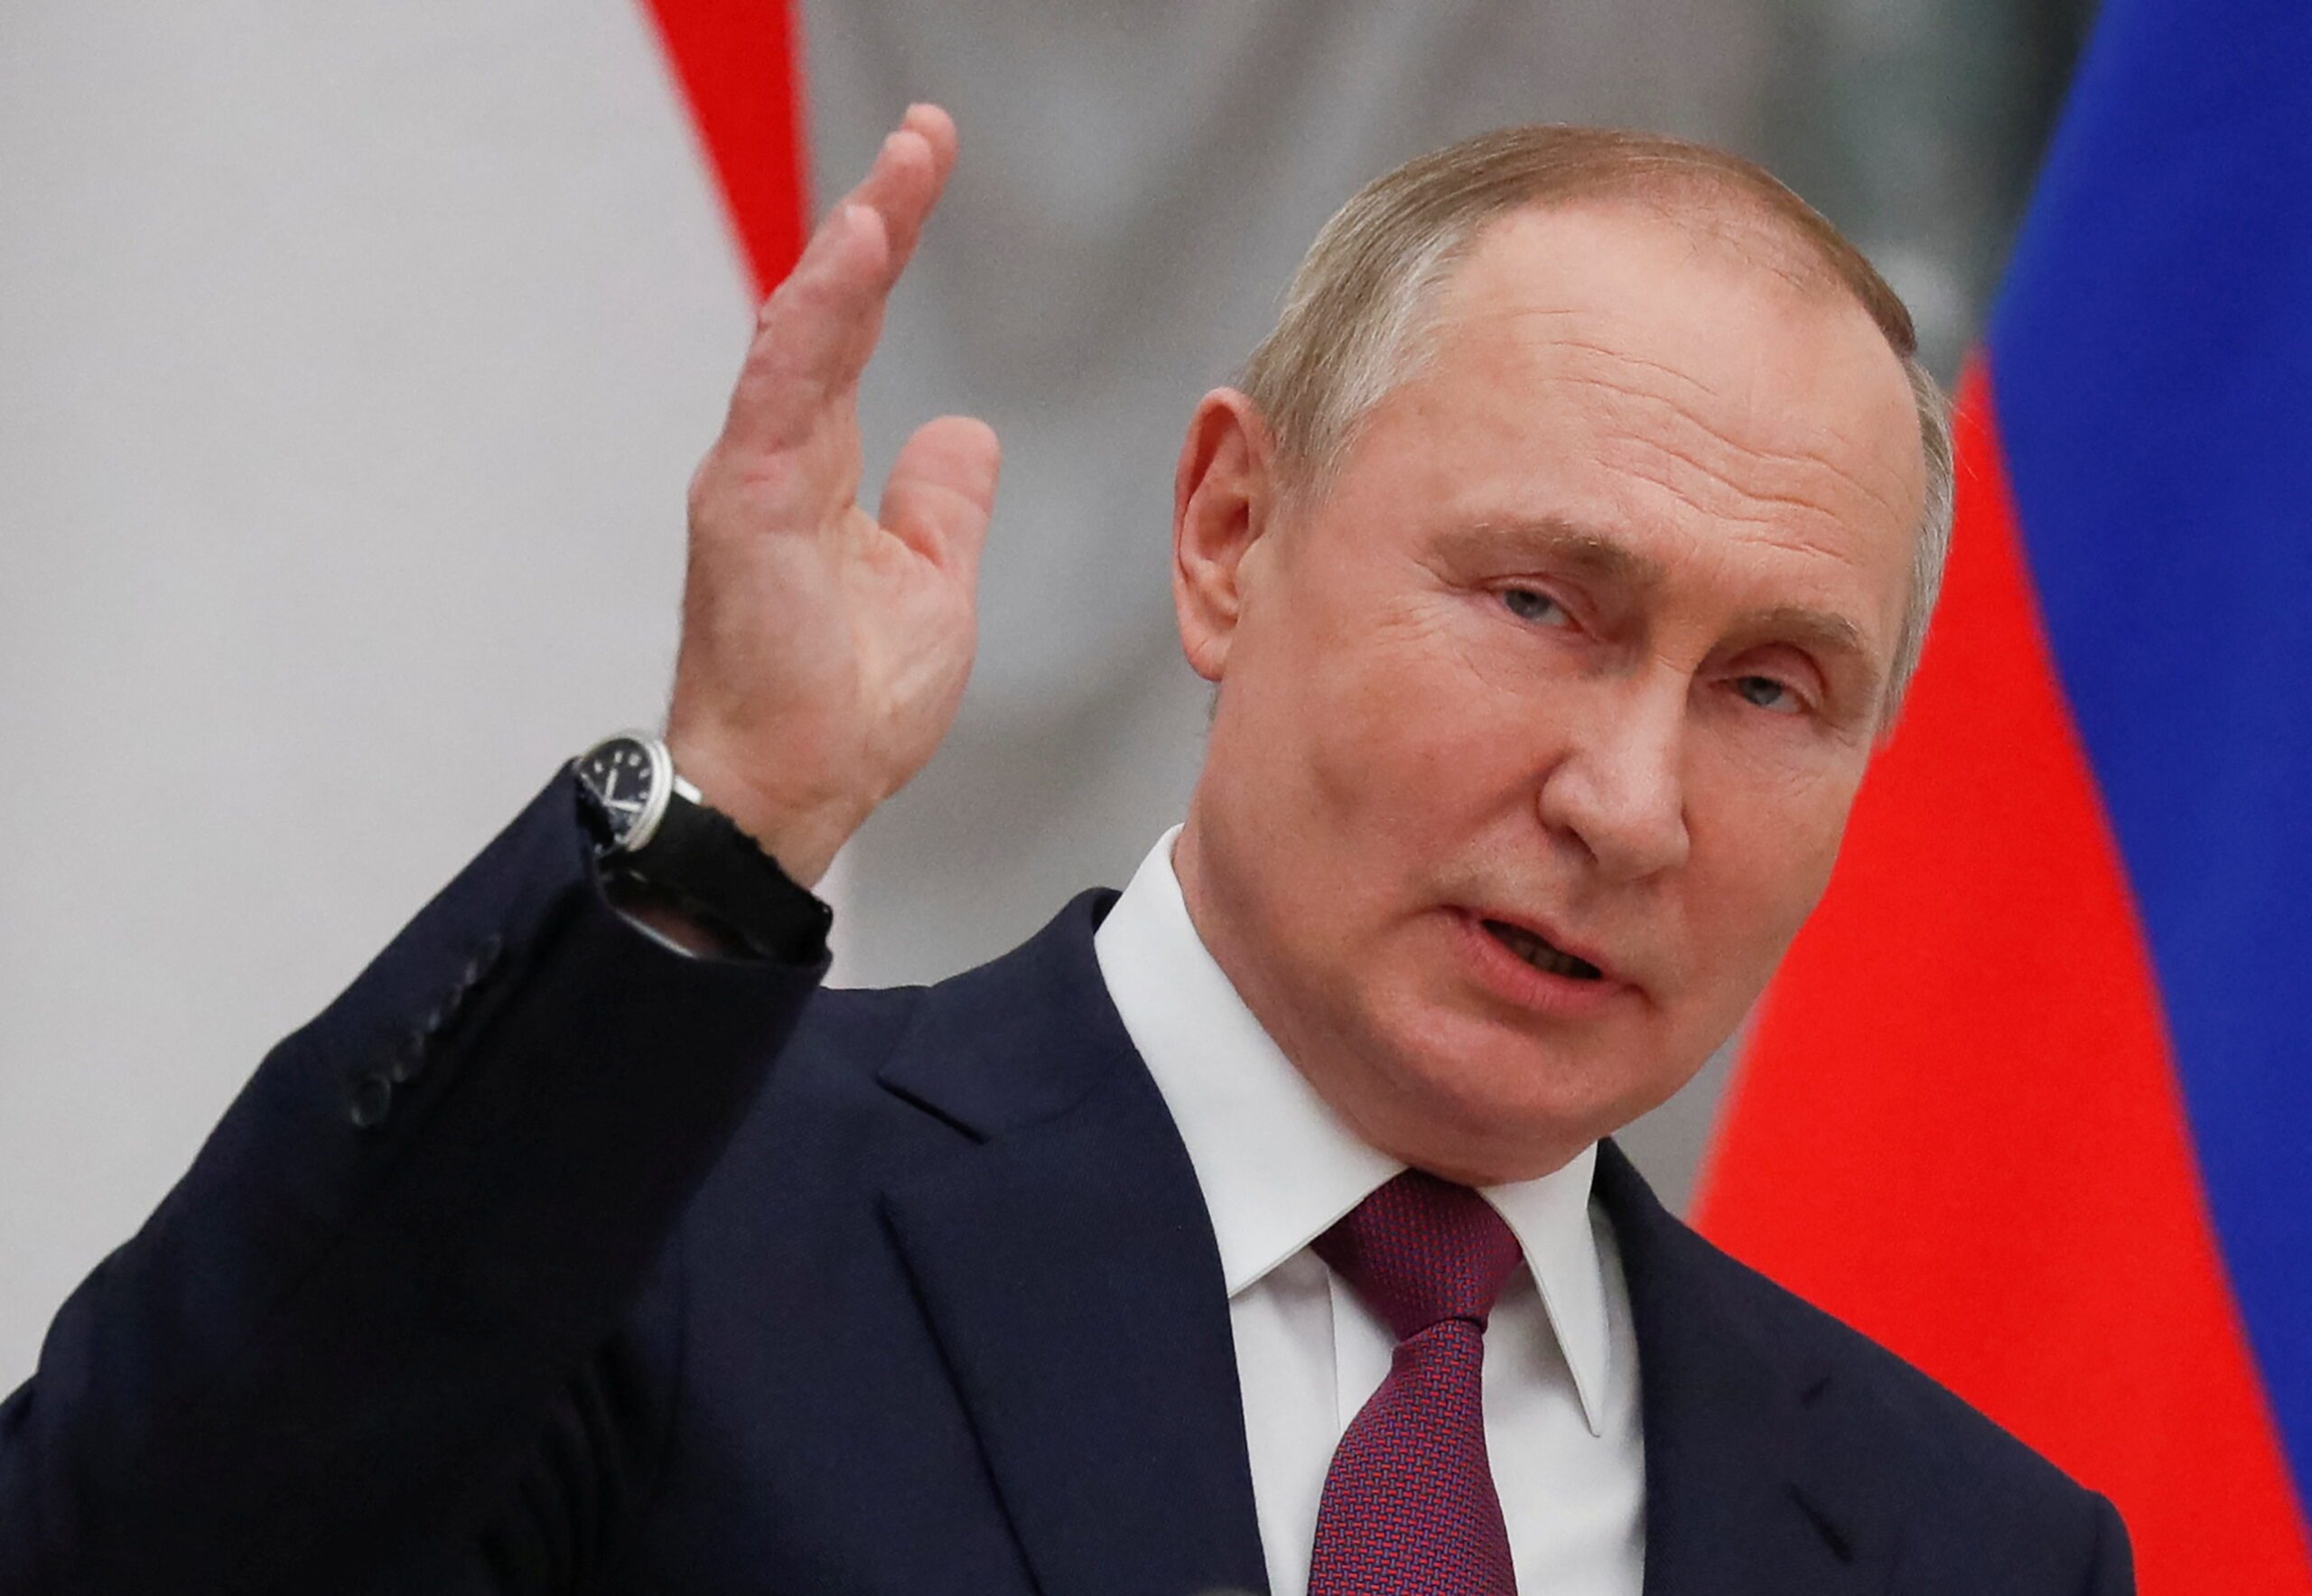 US Senate unanimously condemns Putin as war criminal